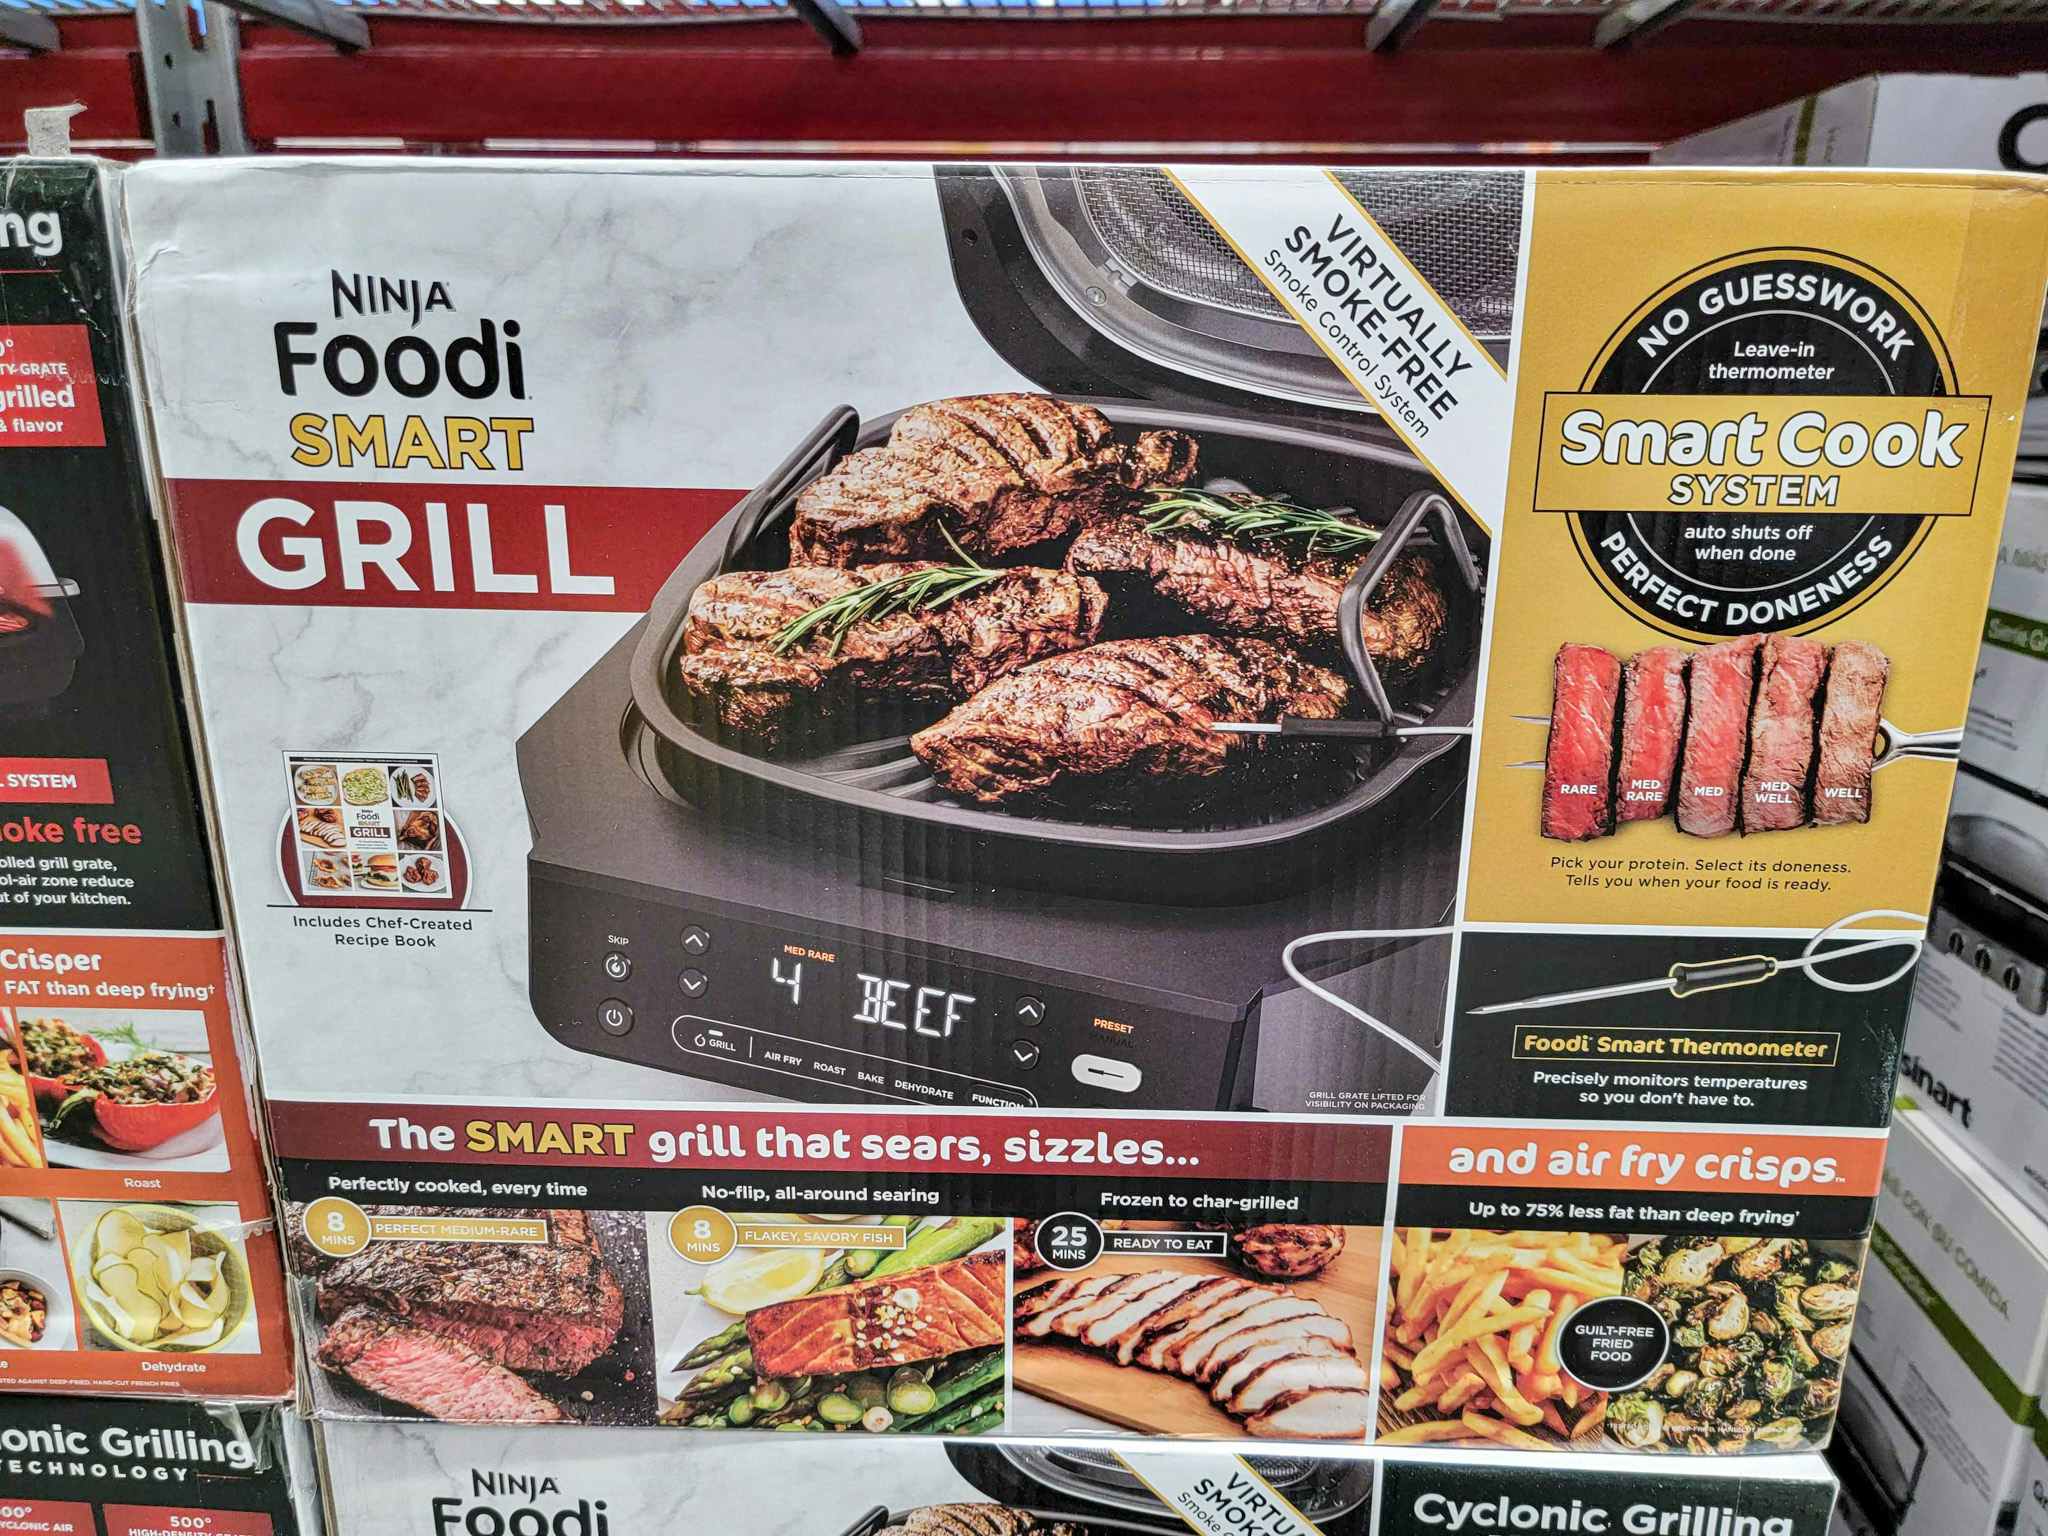 ninja grill